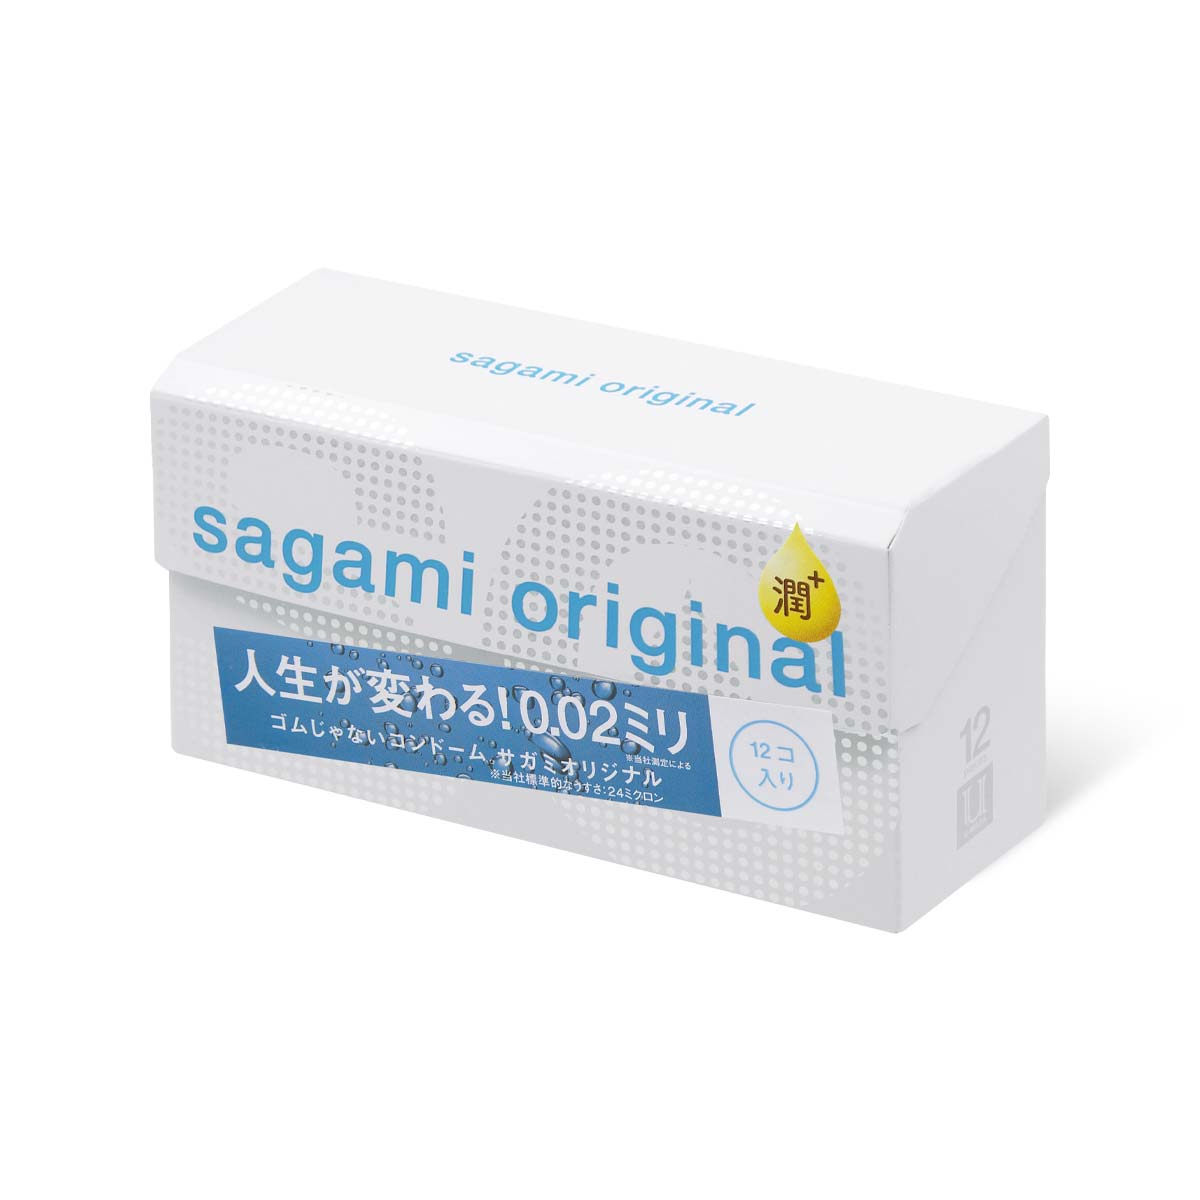 Sagami Original 0.02 Extra Lubricated 12's Pack PU Condom-thumb_1